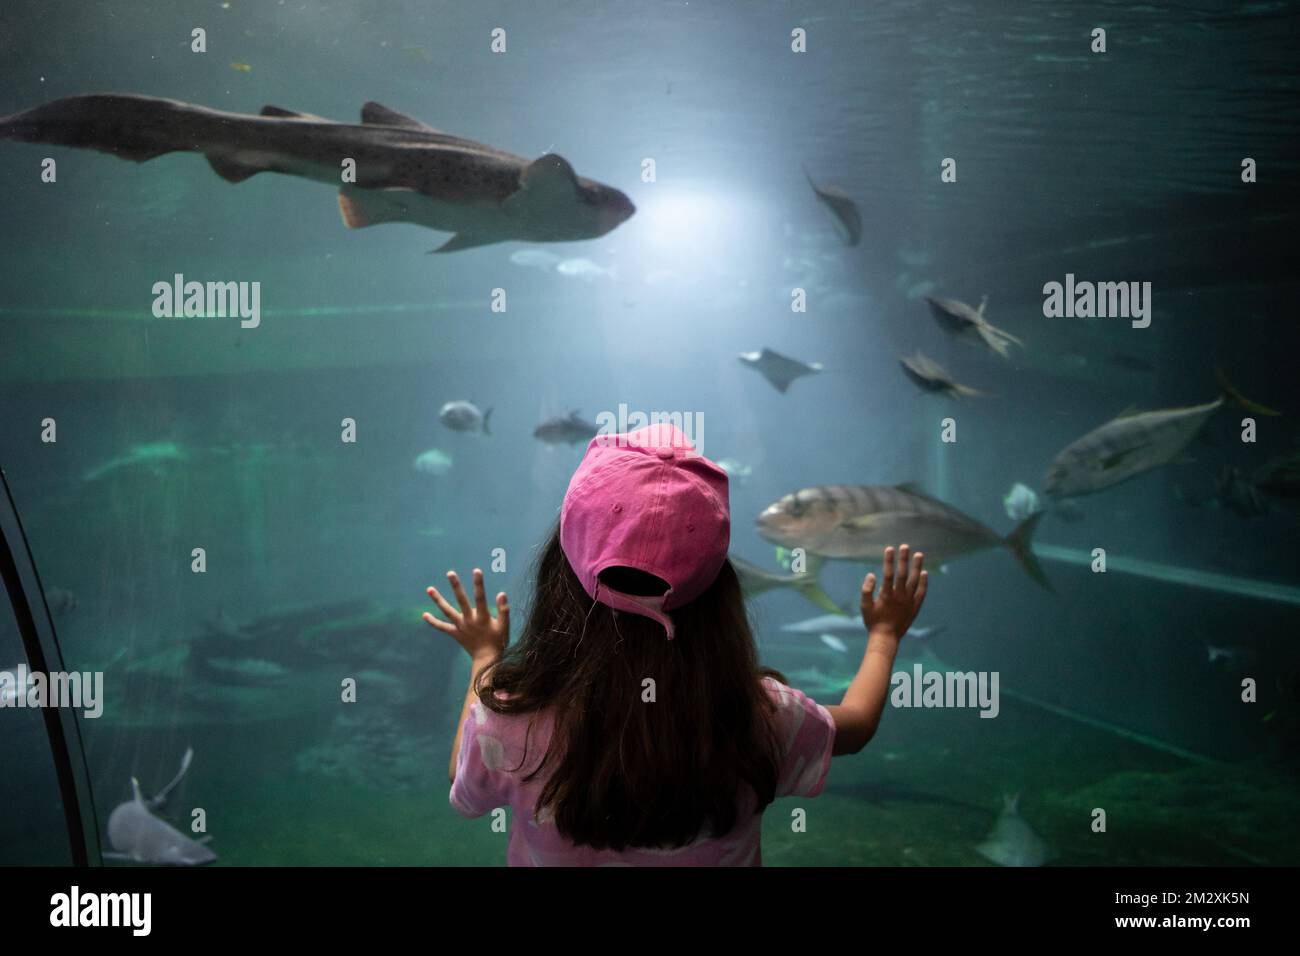 Girl watching fish, glass, underwater passage, Wroclaw, Poland Stock Photo